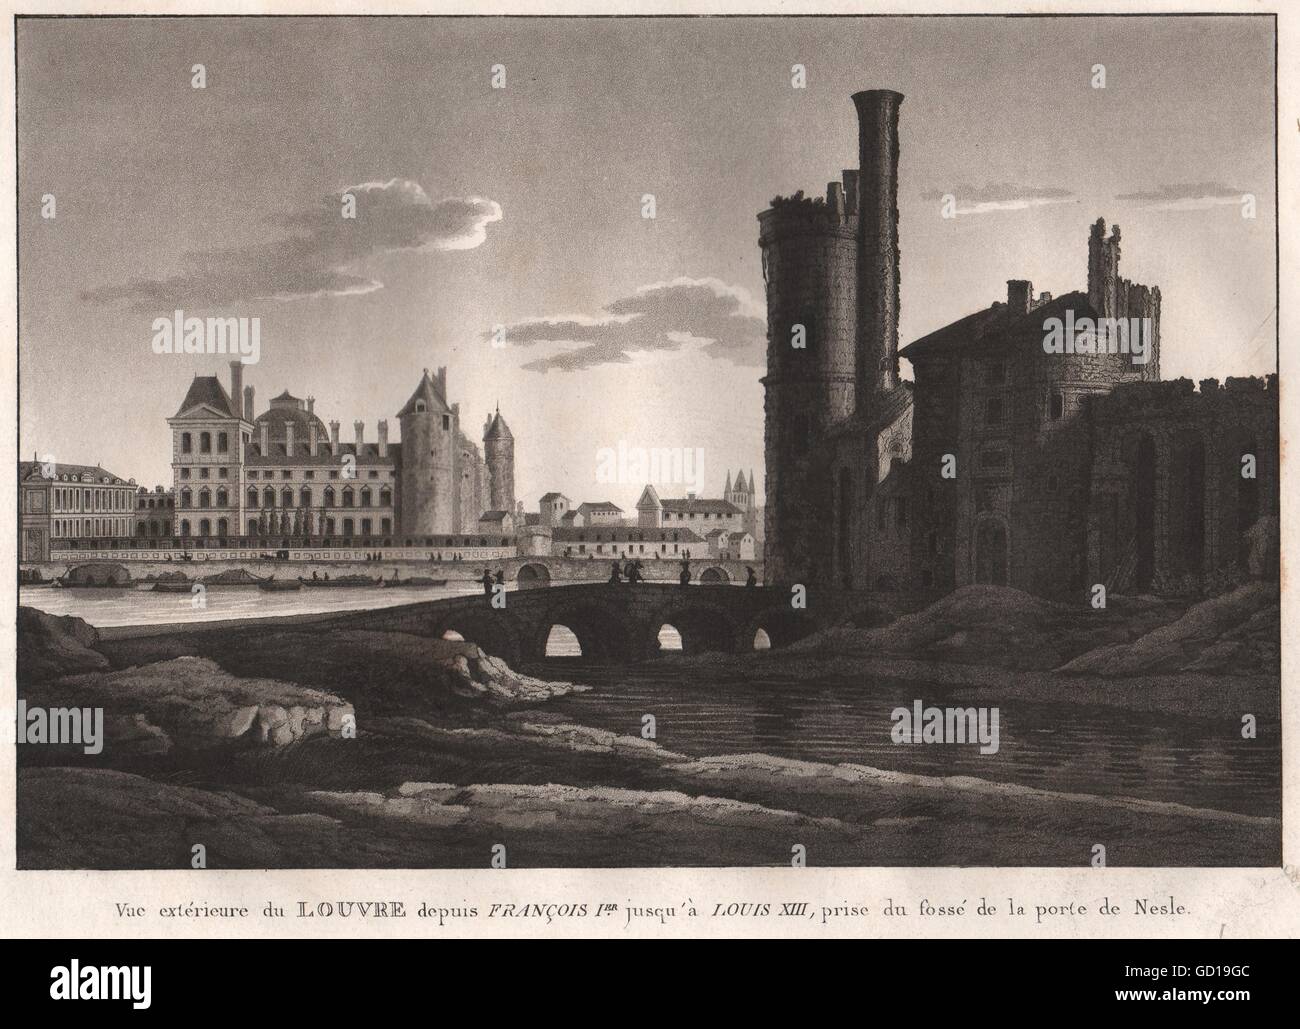 PARIS: Louvre depuis Francois I jusqu'à Louis XIII. Aquatint, old print 1808 Stock Photo